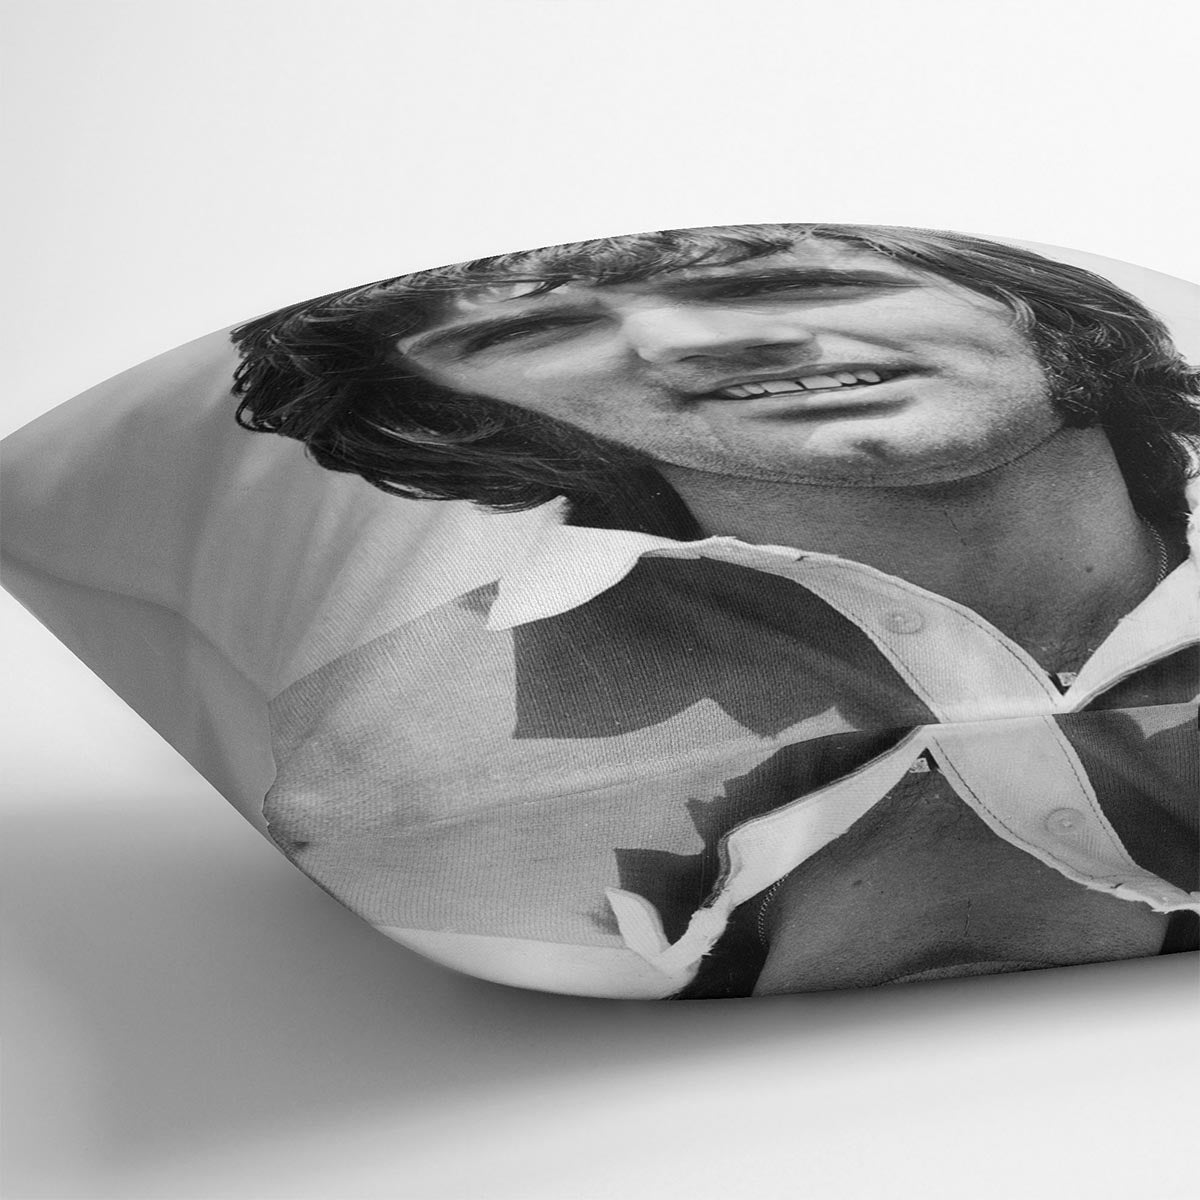 George Best Icon Cushion